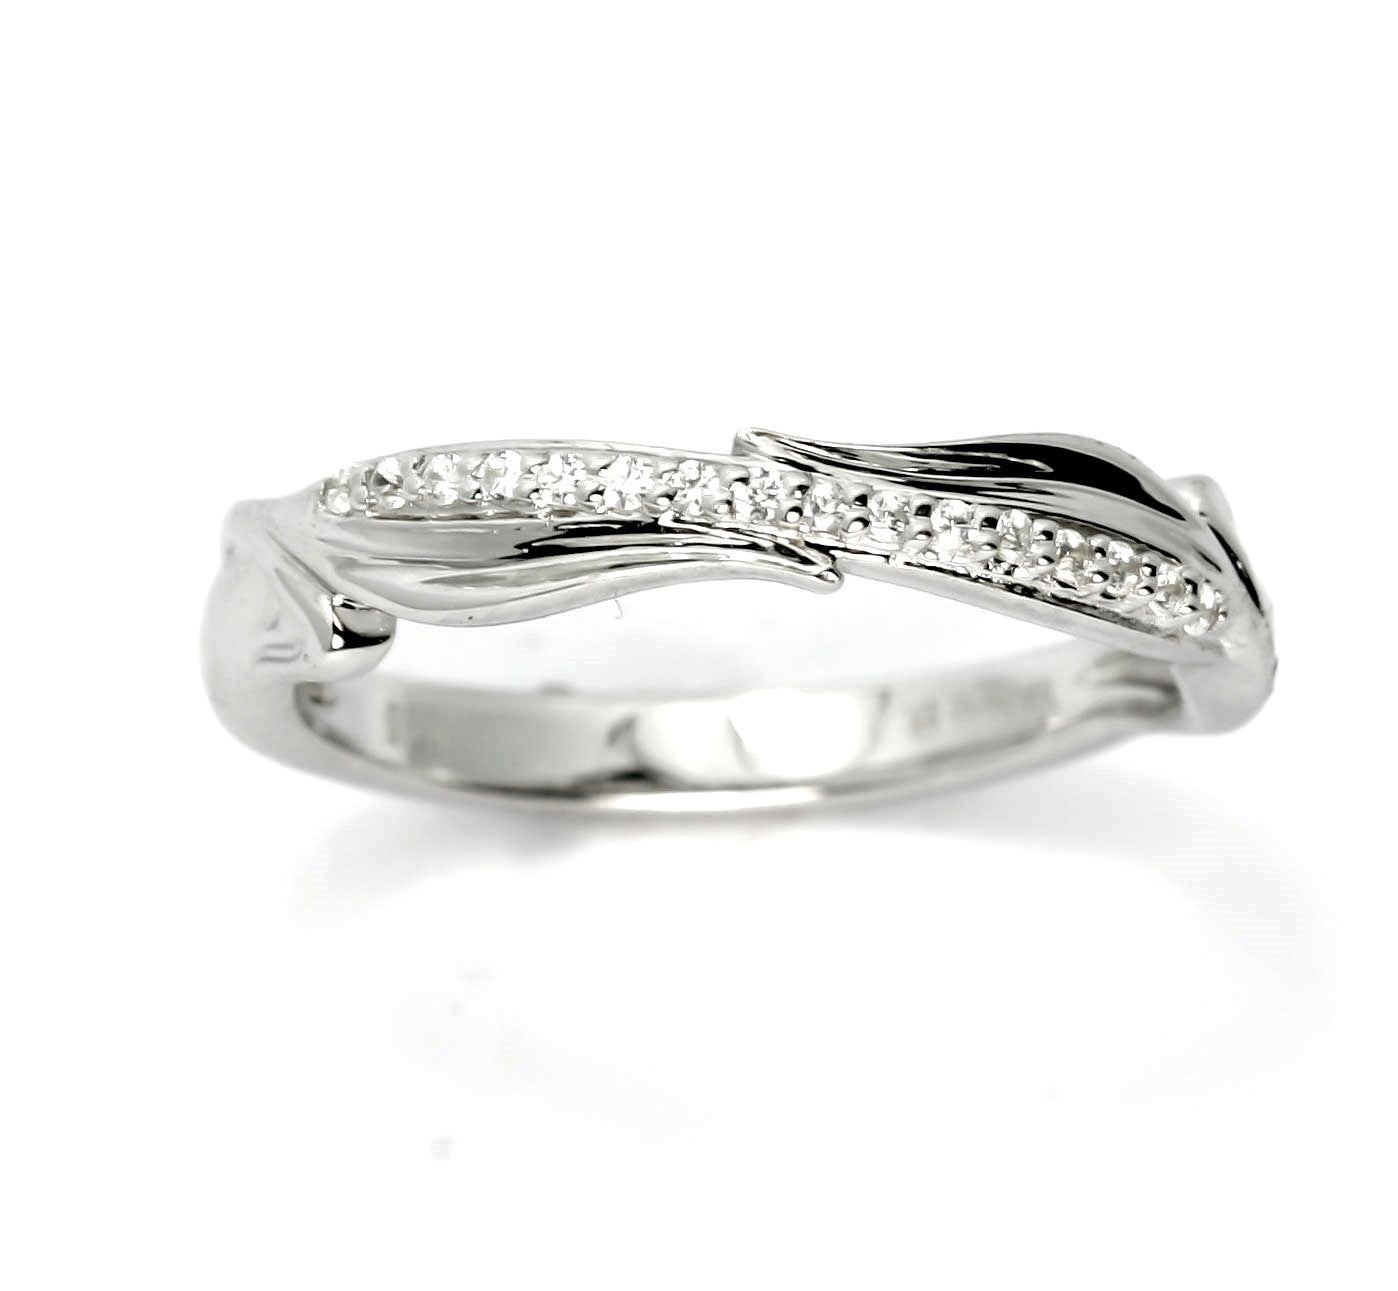 Diamond Engagement Ring and Wedding Band Set,  Bridal Set, Wedding Set, 1 Carat  "Forever Brilliant" Moissanite Anniversary Ring - FBY11666